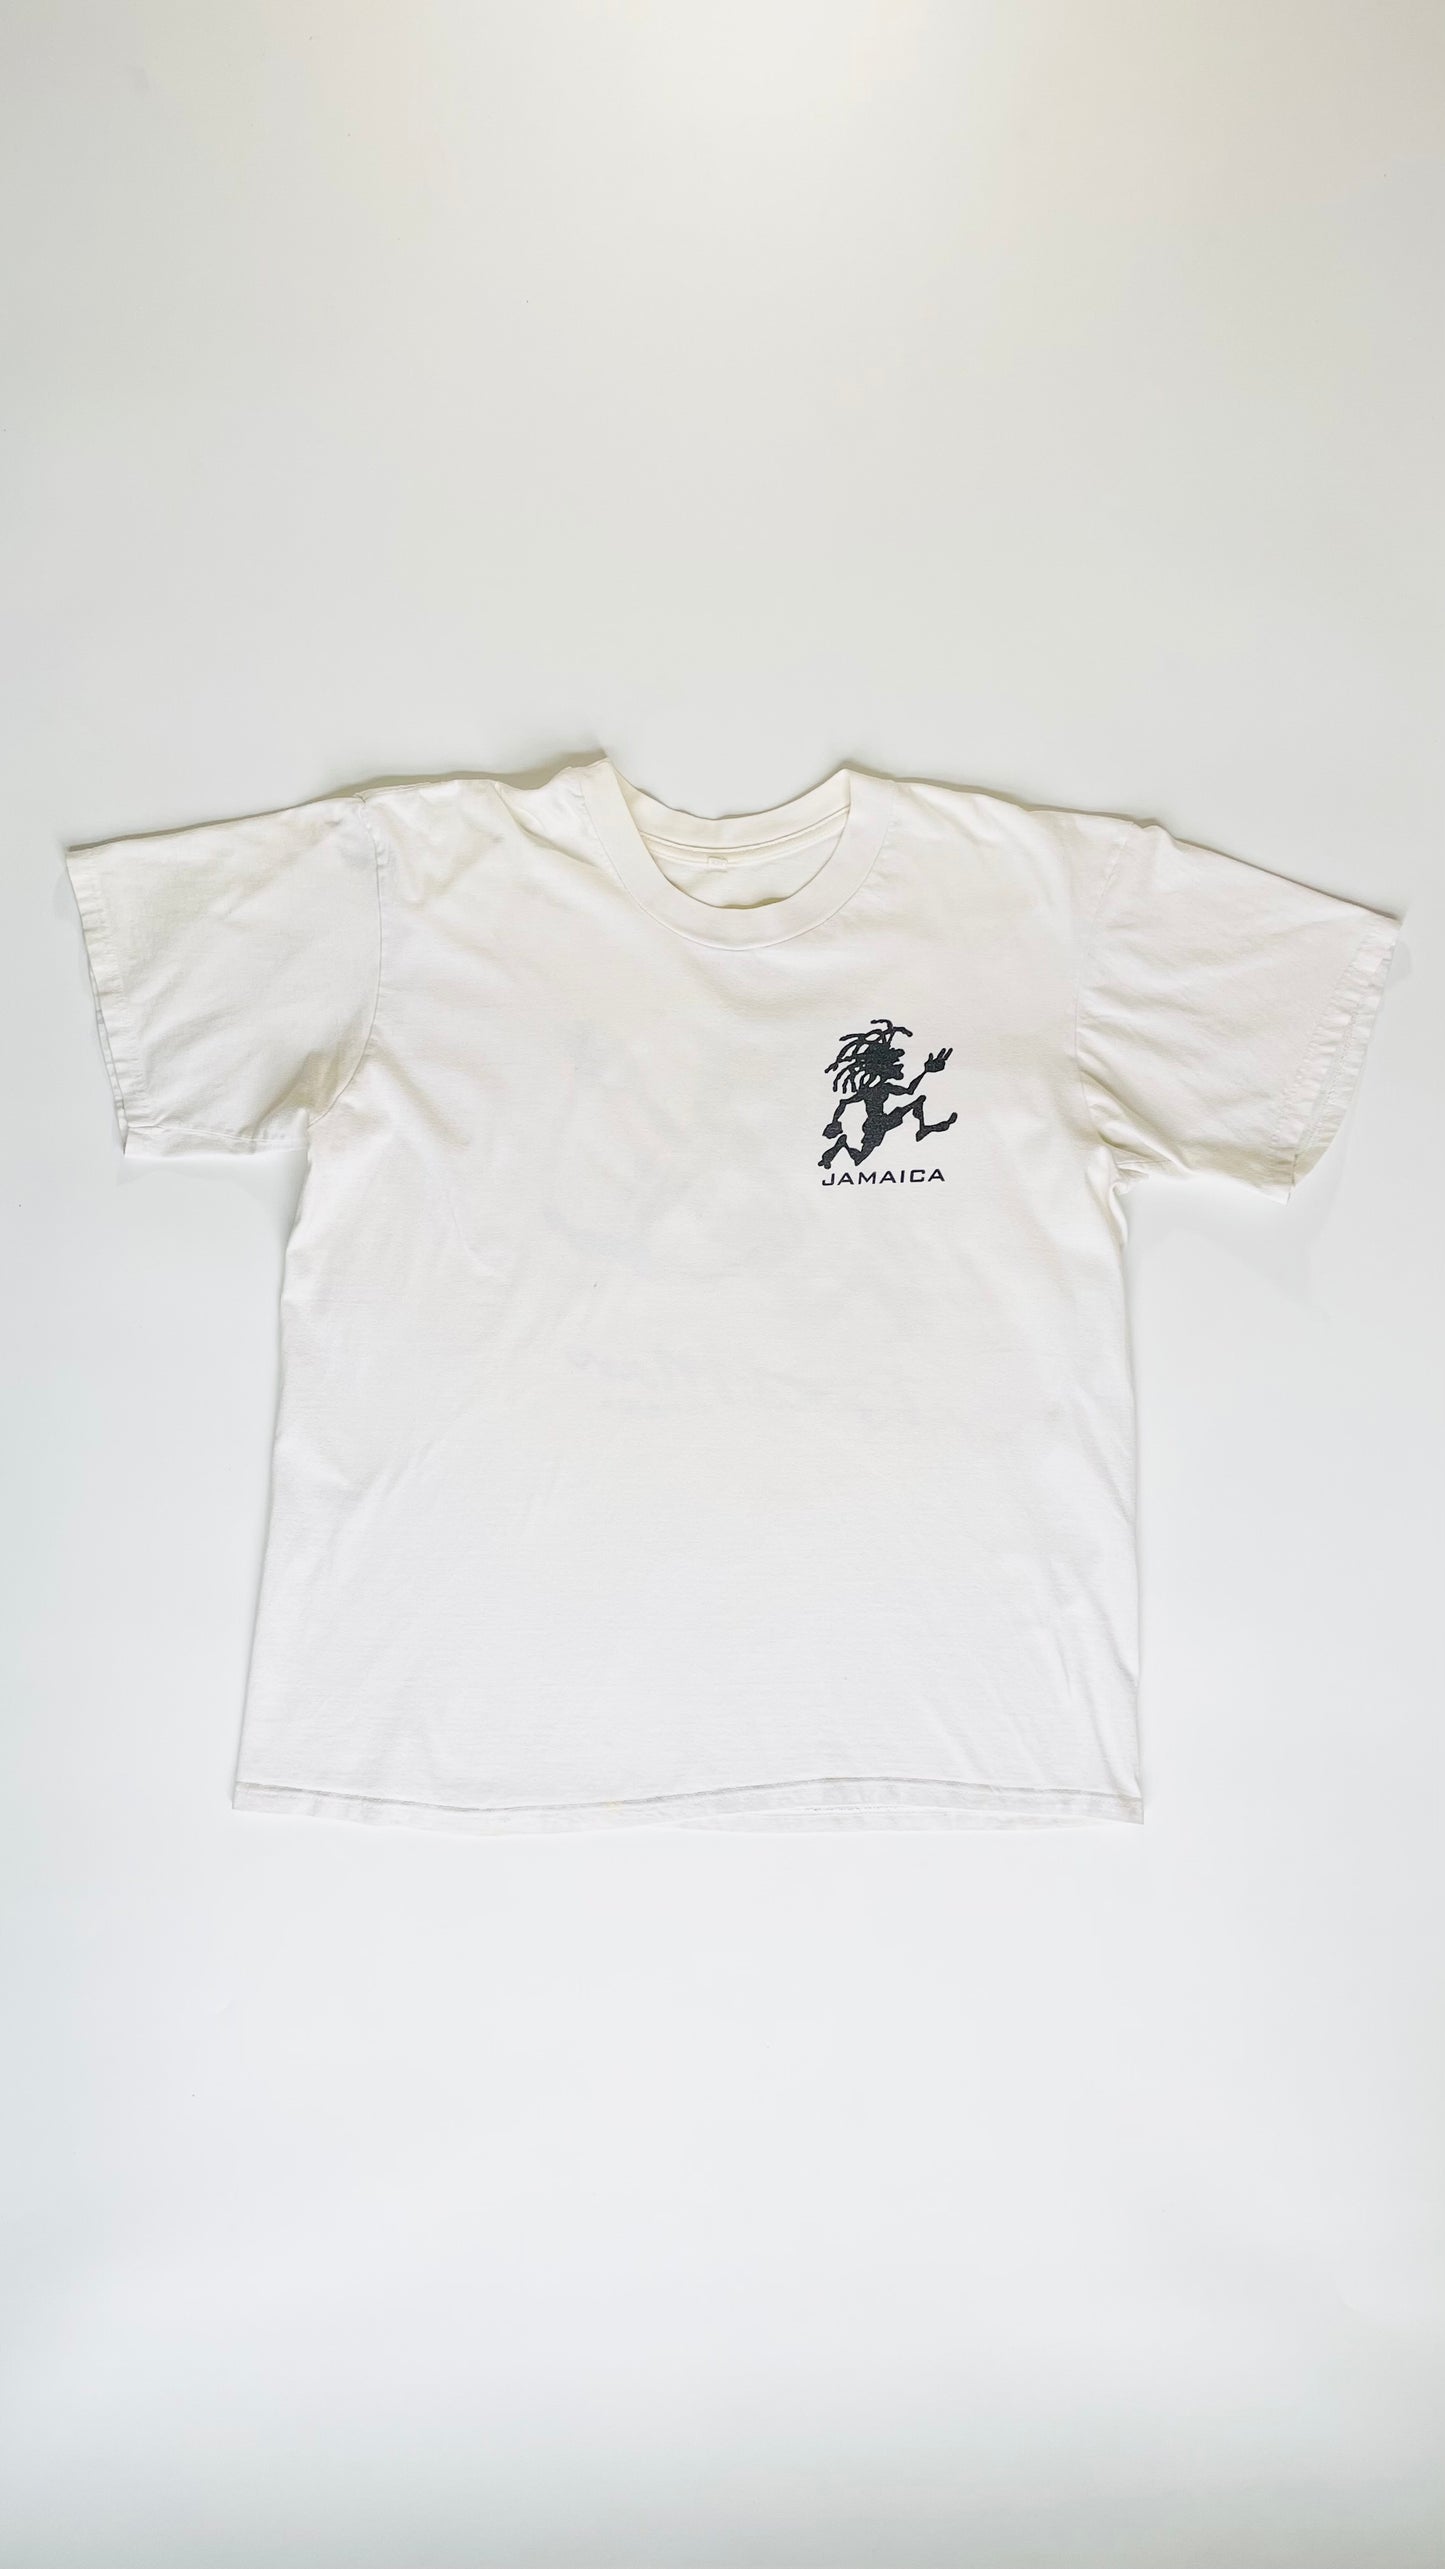 90s White Jamaica rasta man t-shirt  - Size XXL